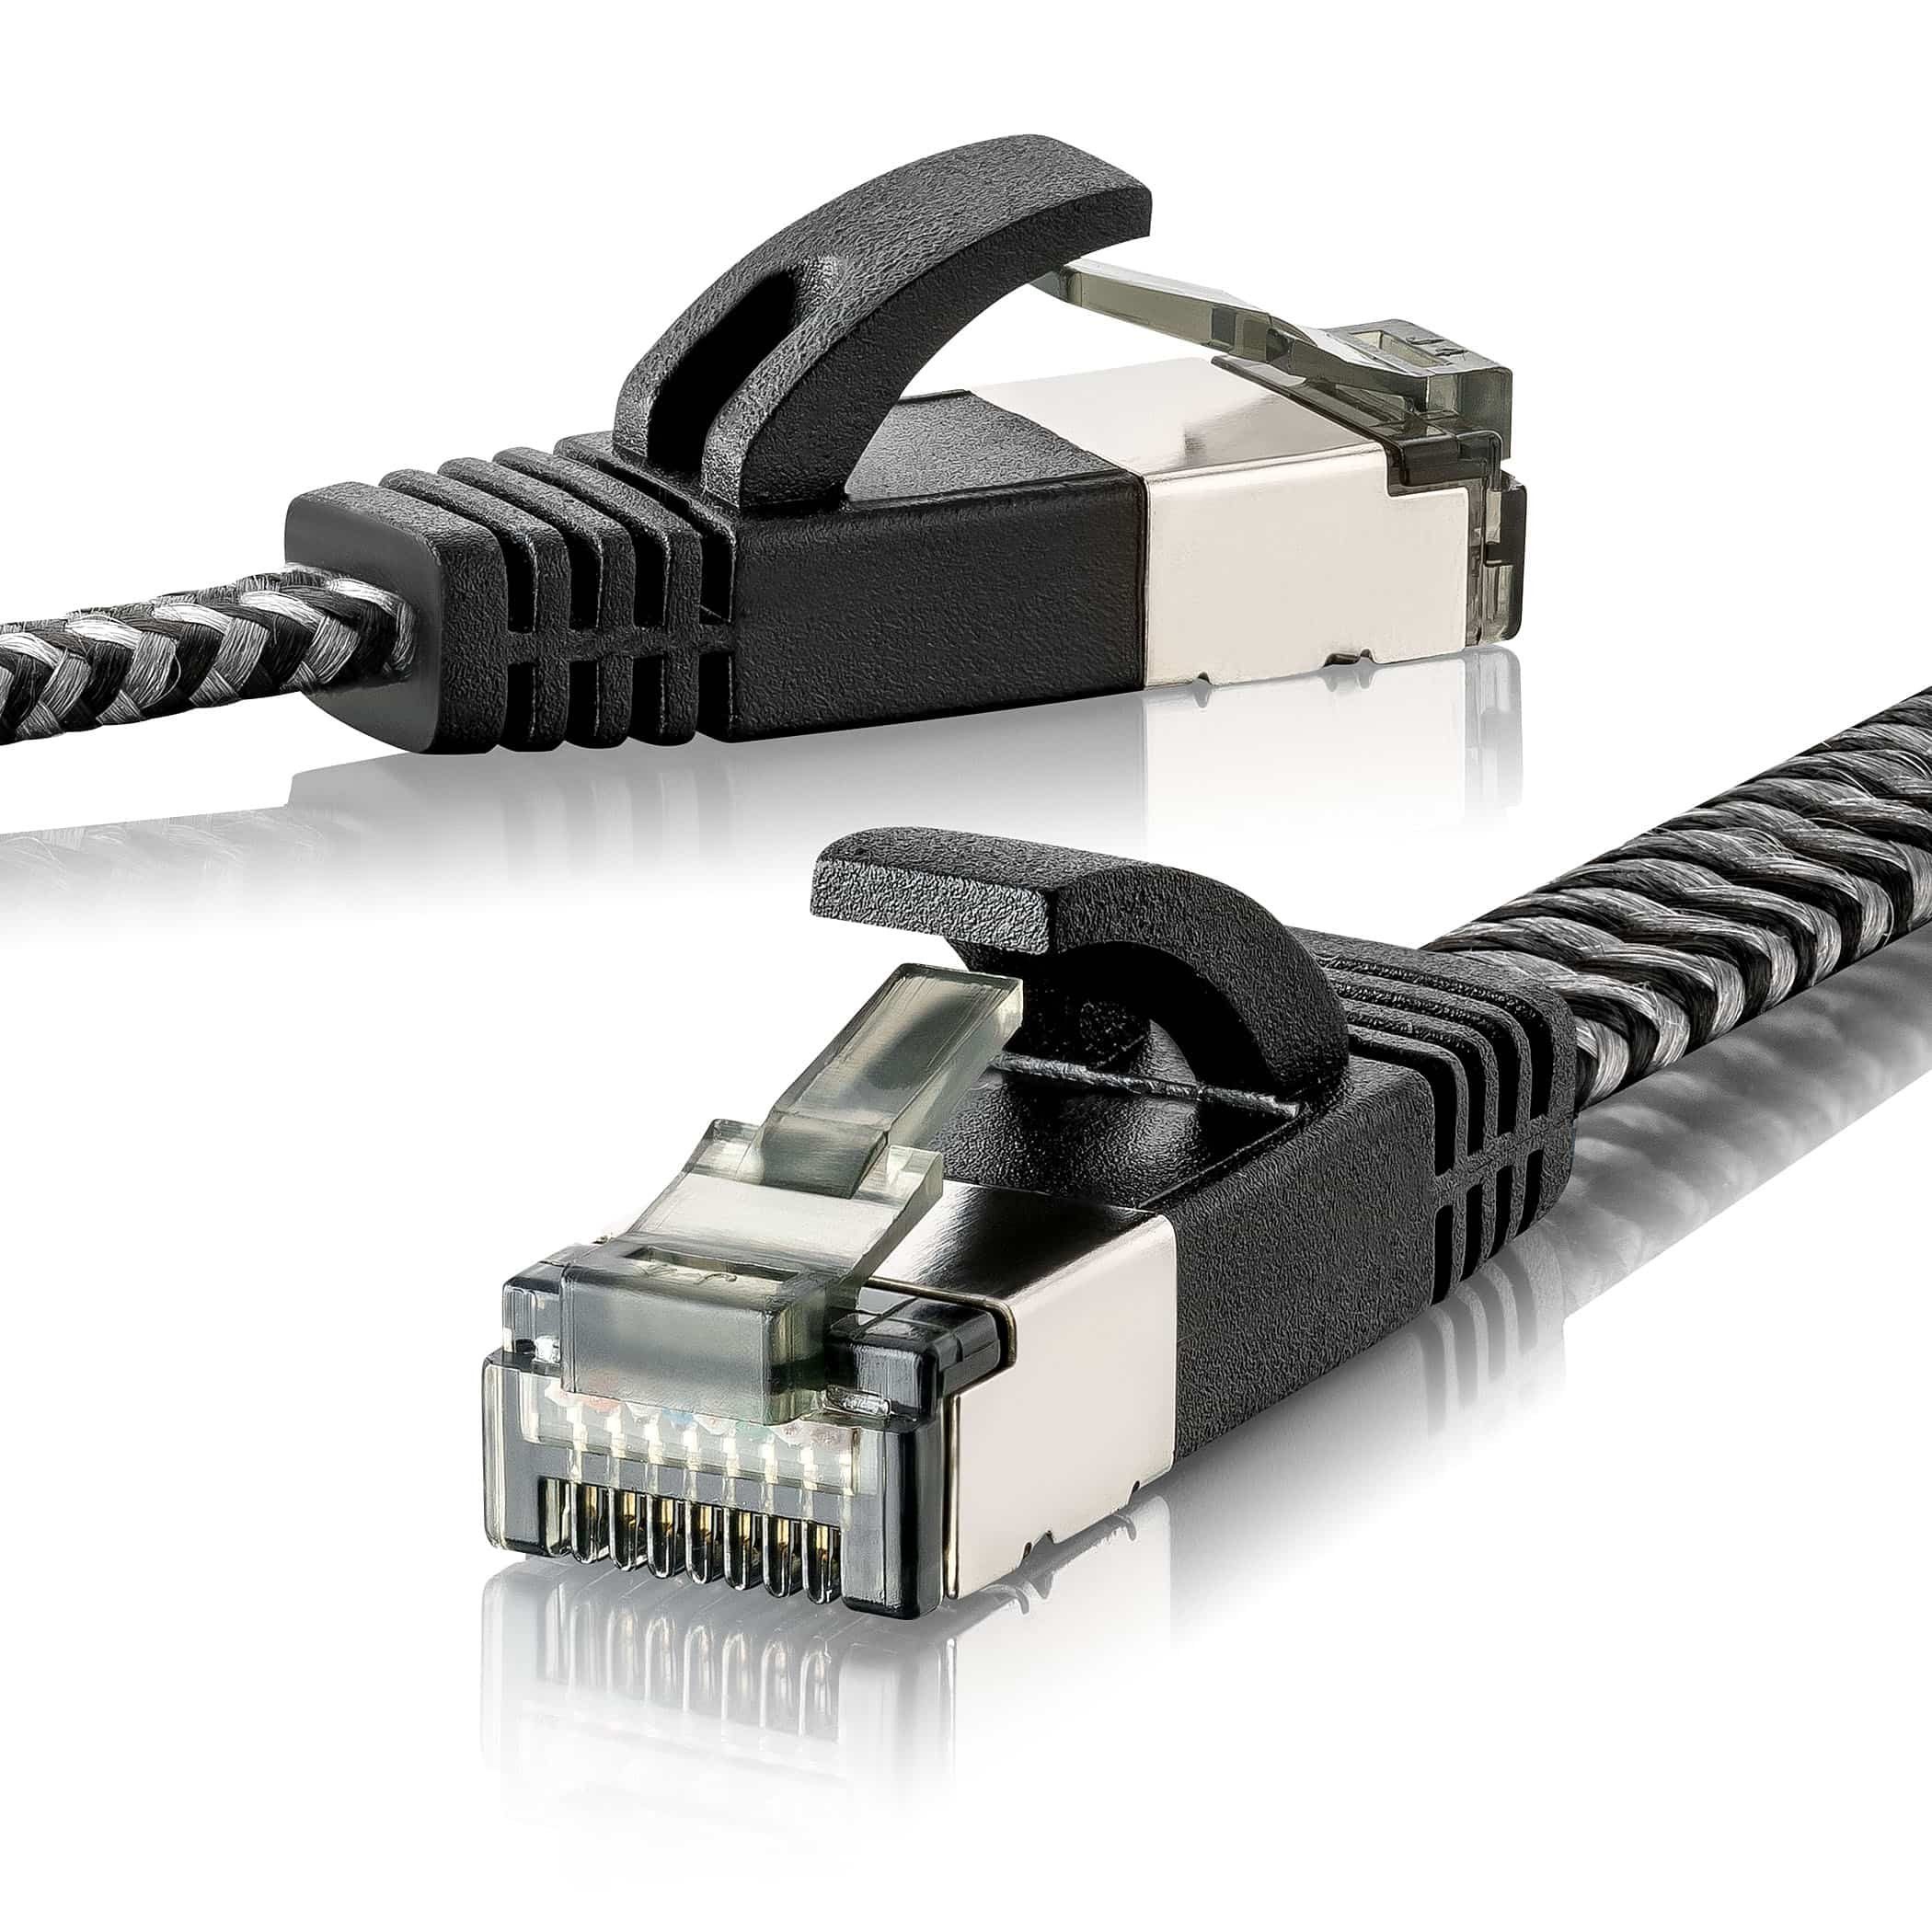 SEBSON »LAN Kabel 10m CAT 7 flach, Netzwerkkabel 10 Gbit/s, RJ45 Stecker  für Router, PC, TV, NAS, Spielekonsolen - Ethernet Kabel U-FTP abgeschirmt«  Netzkabel online kaufen | OTTO